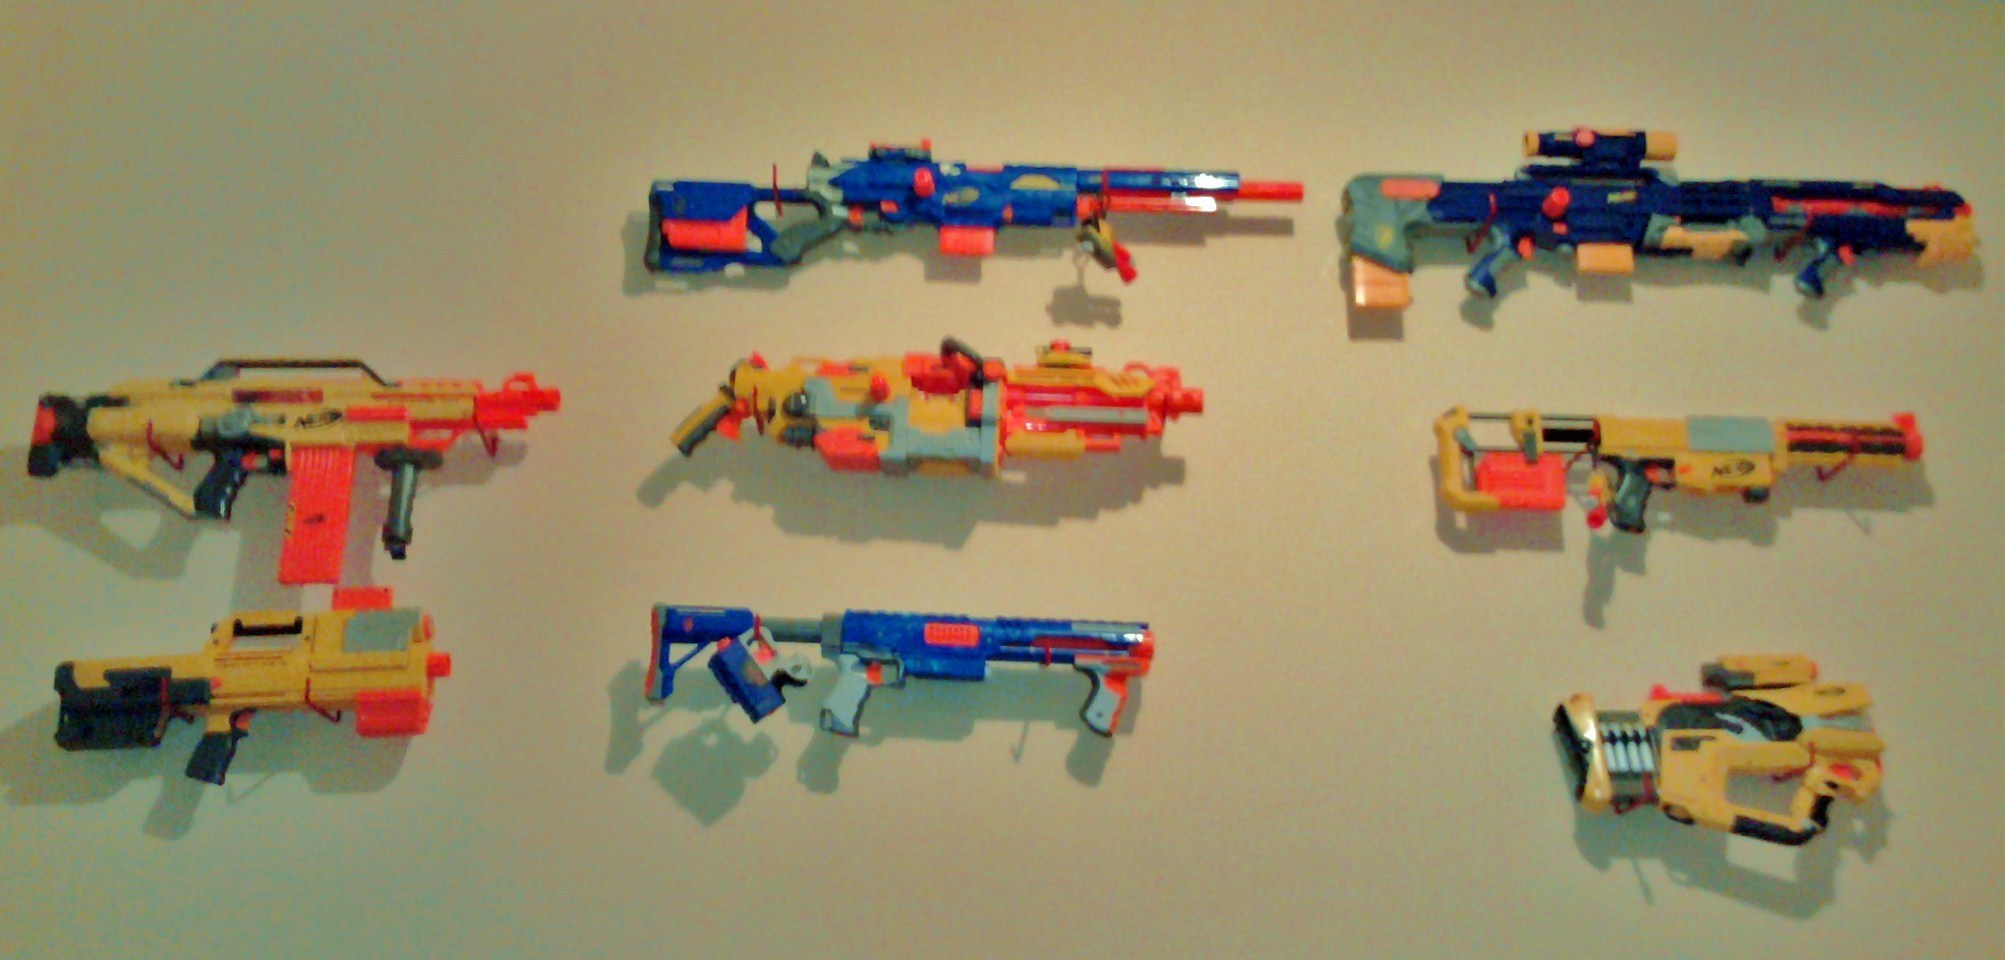 Nerf Guns images desiccators nerf arsenal HD wallpaper and